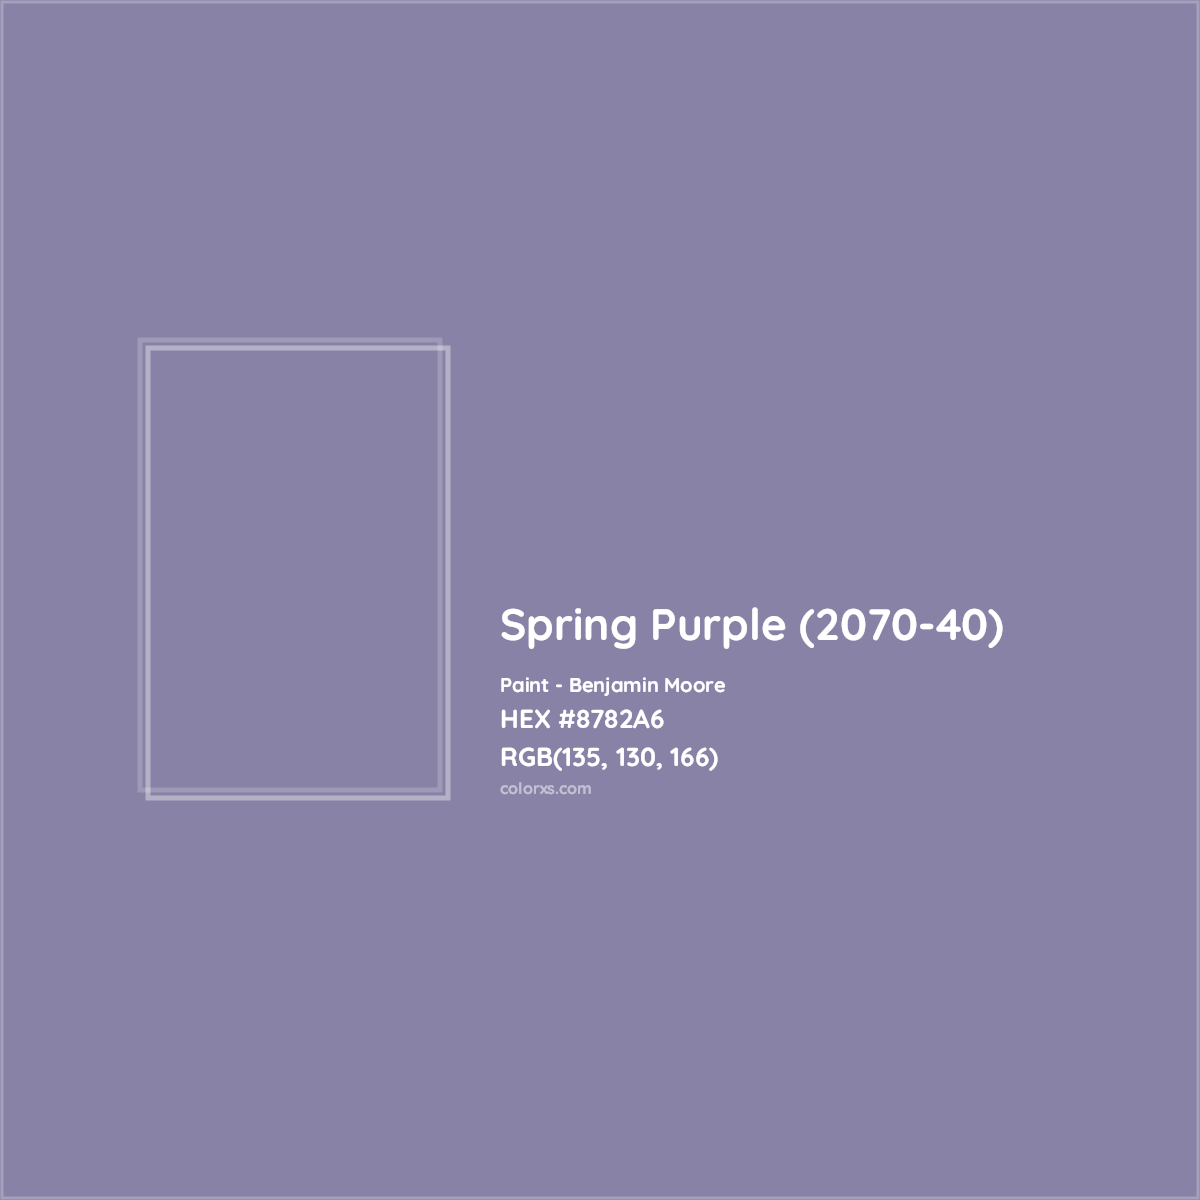 HEX #8782A6 Spring Purple (2070-40) Paint Benjamin Moore - Color Code